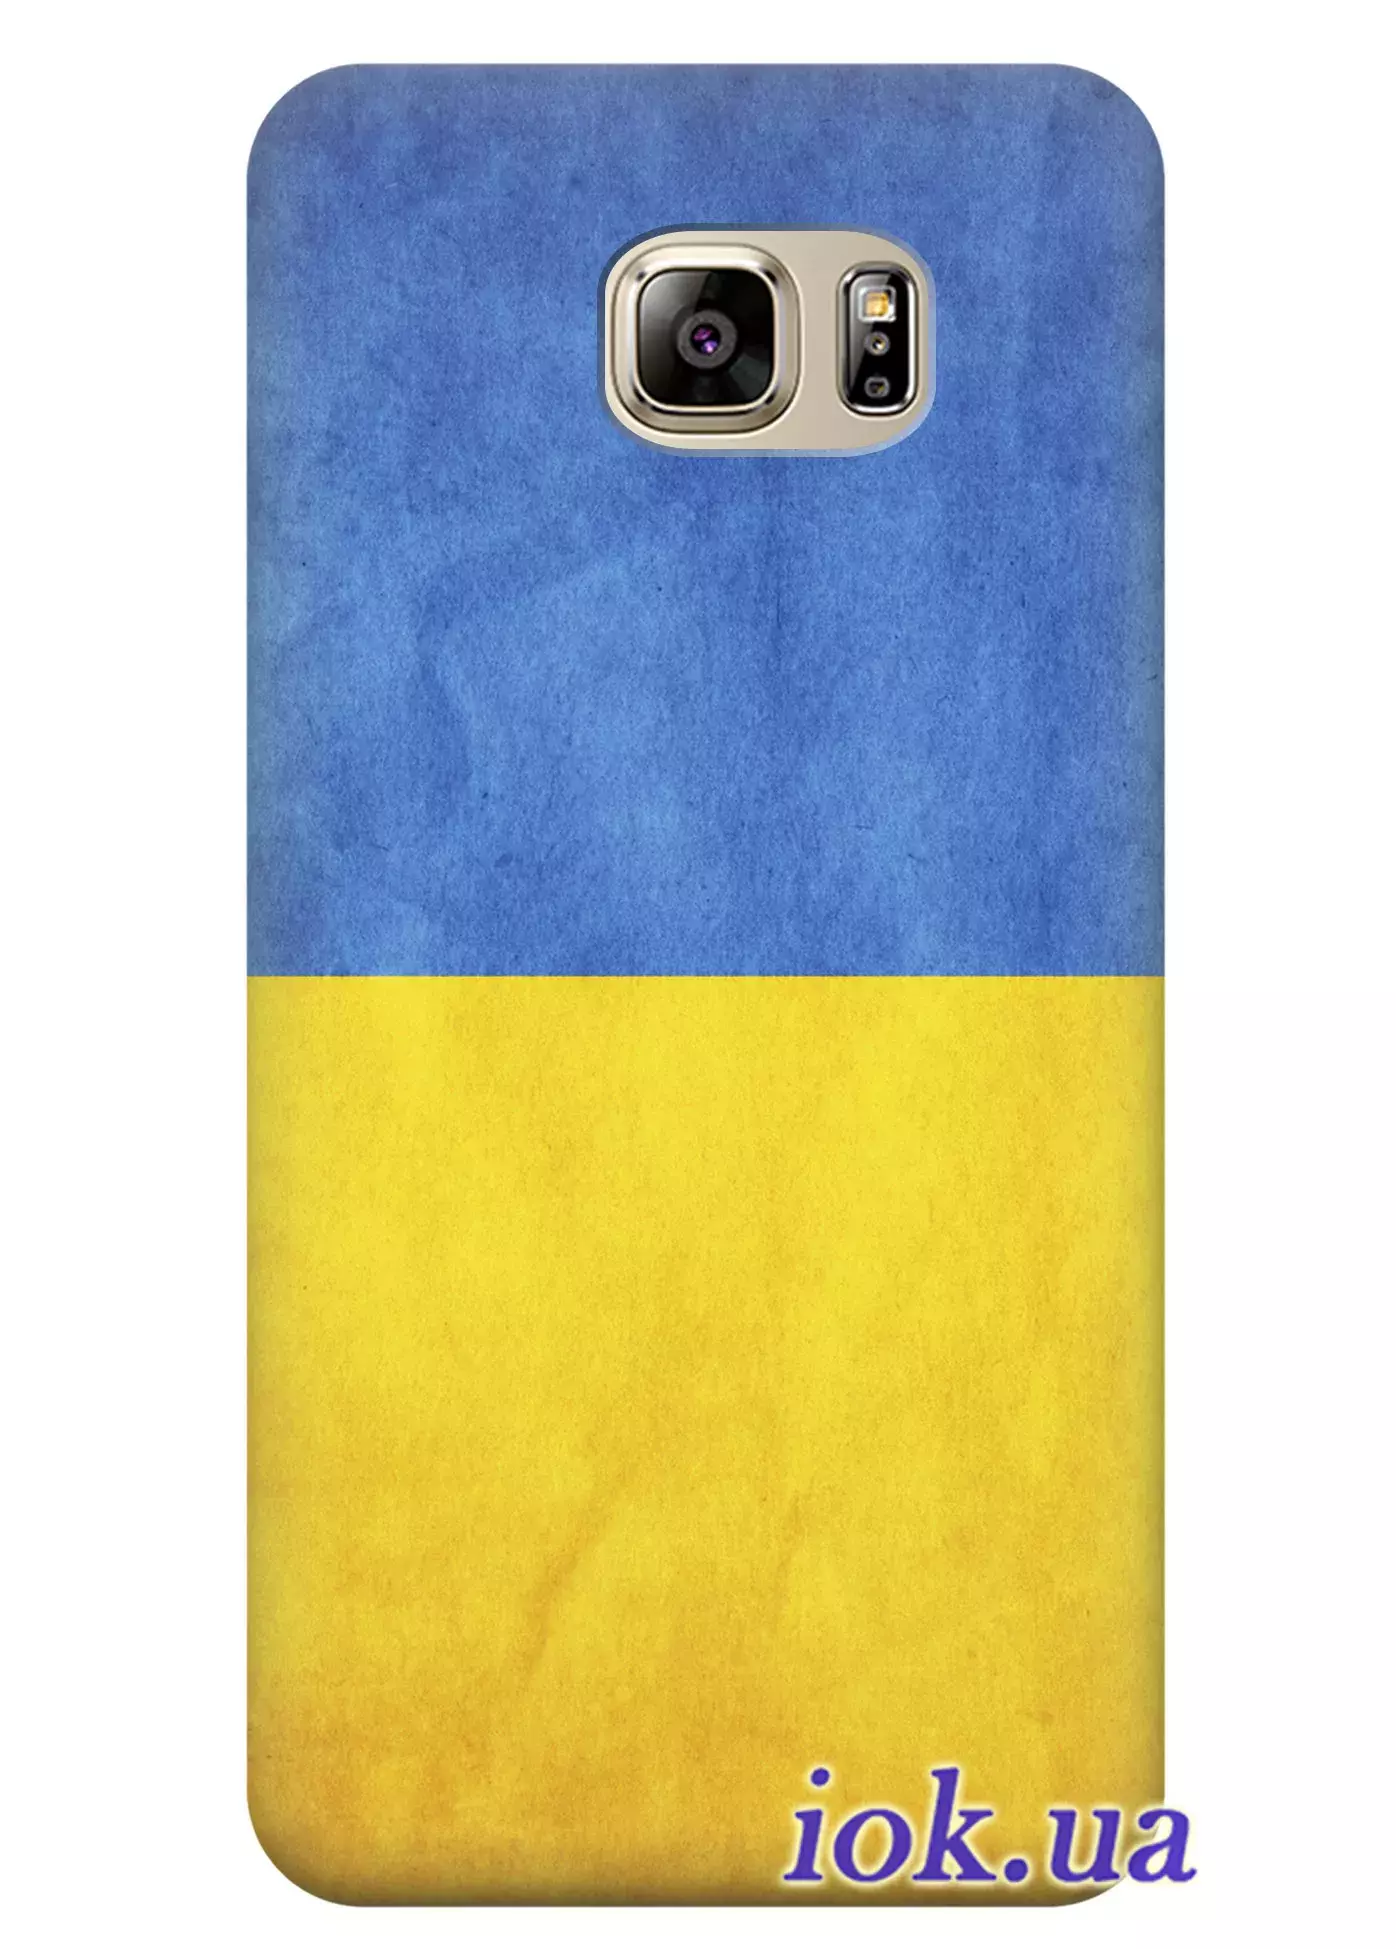 Чехол для Galaxy Note 5 - Украинский флаг